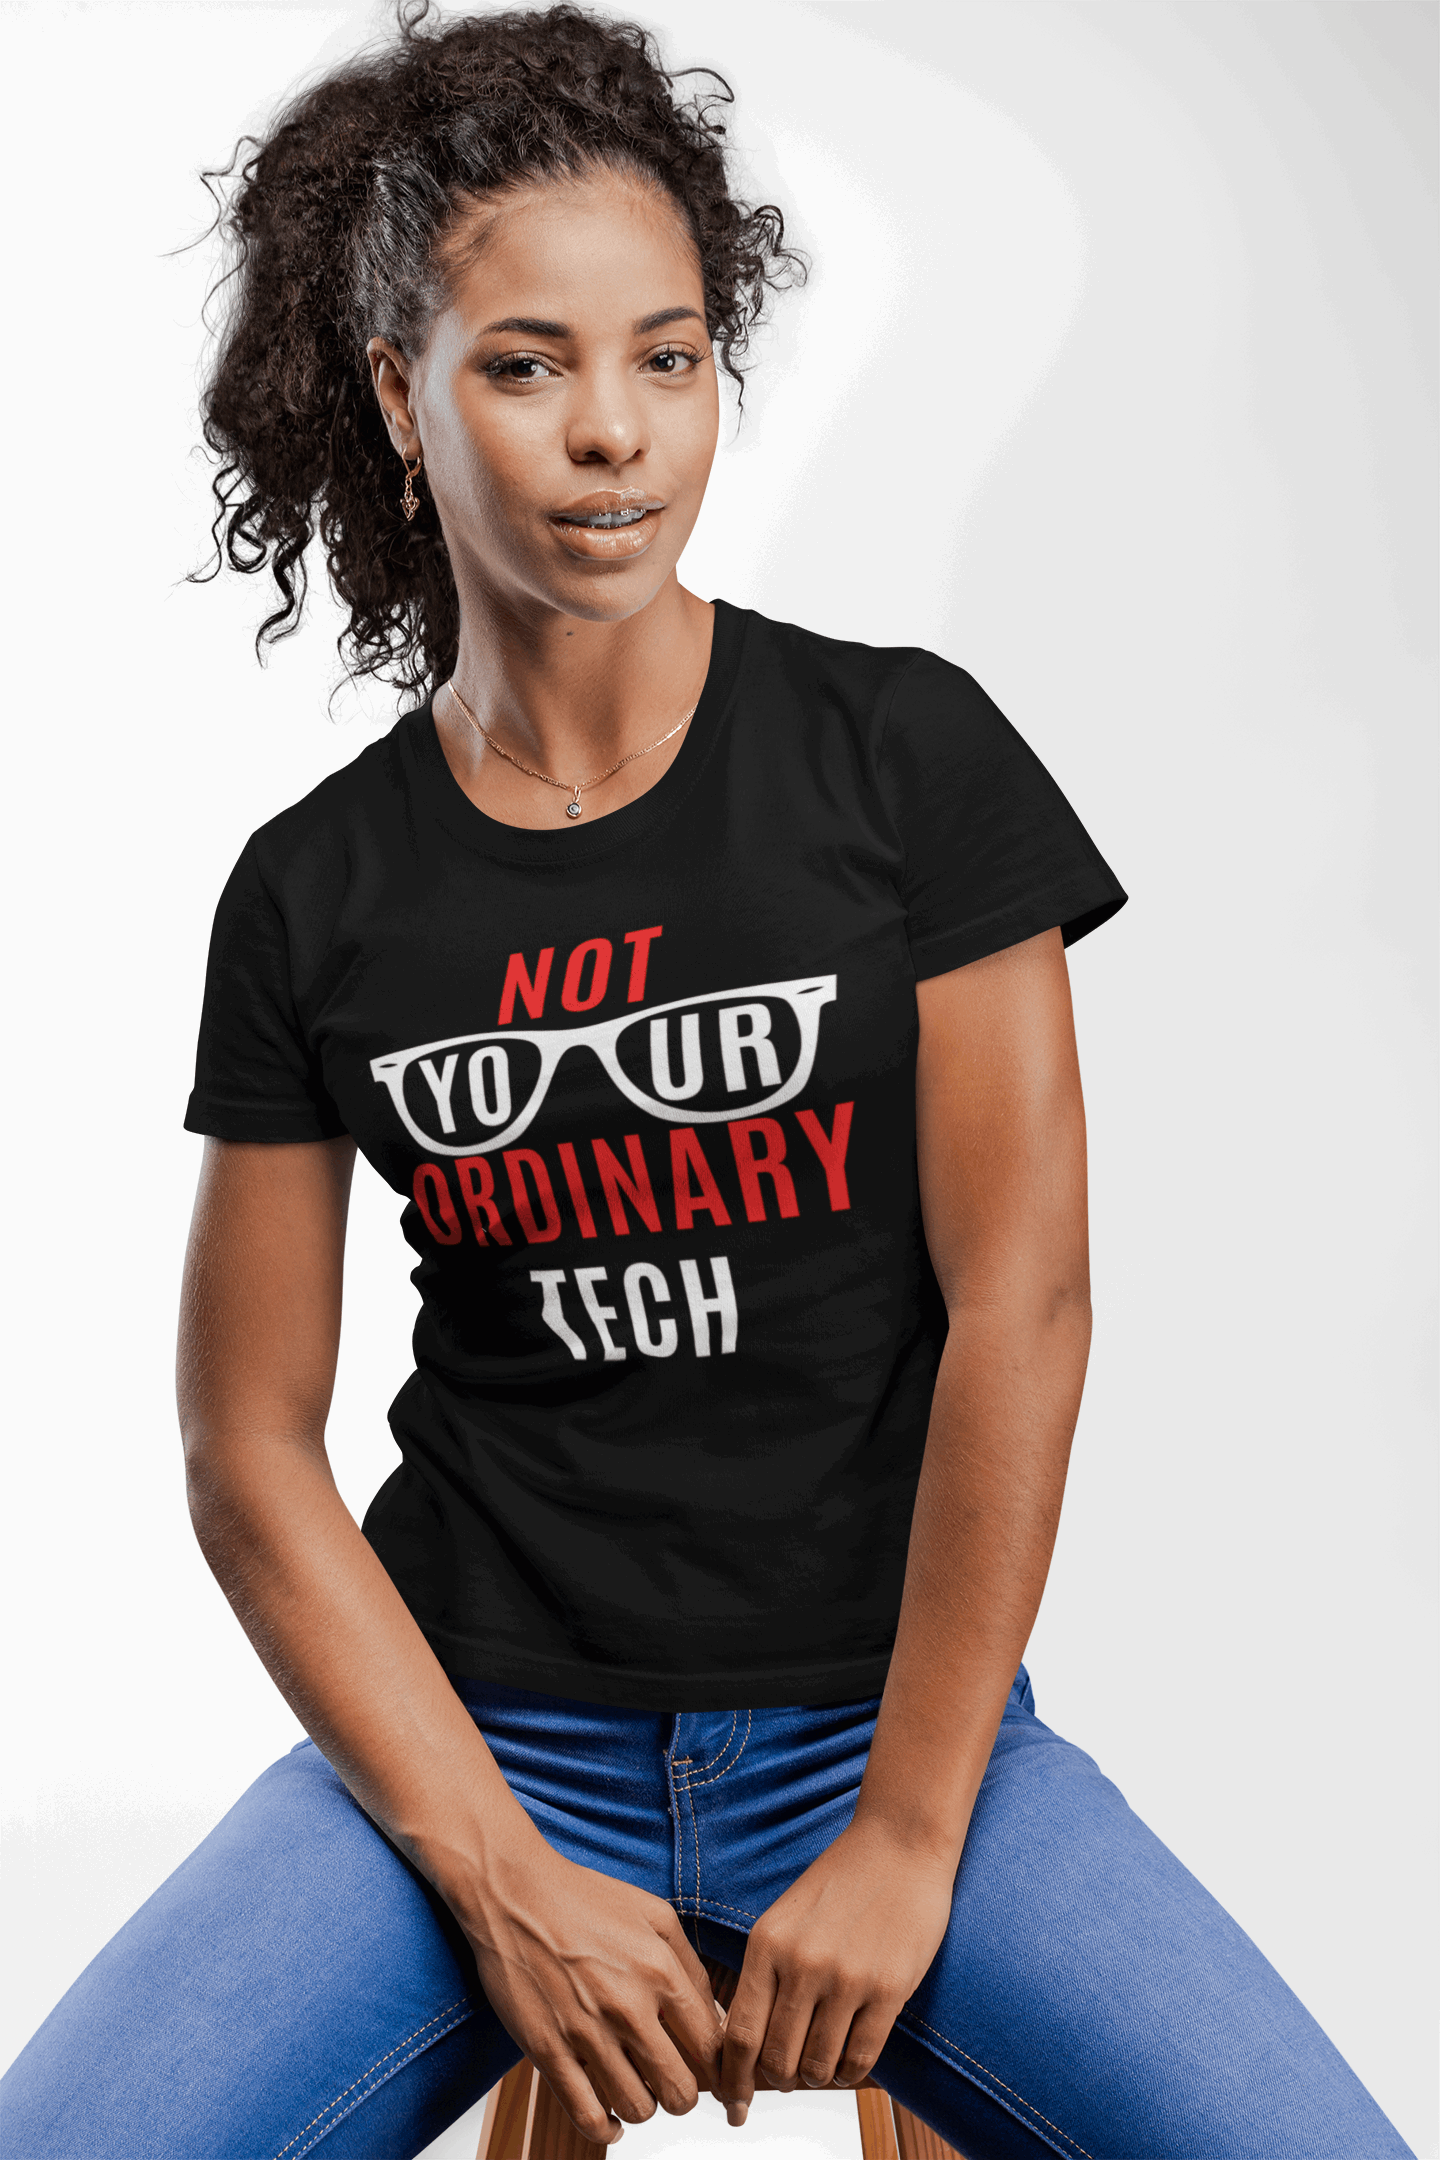 Not Your Ordinary Tech T-Shirt